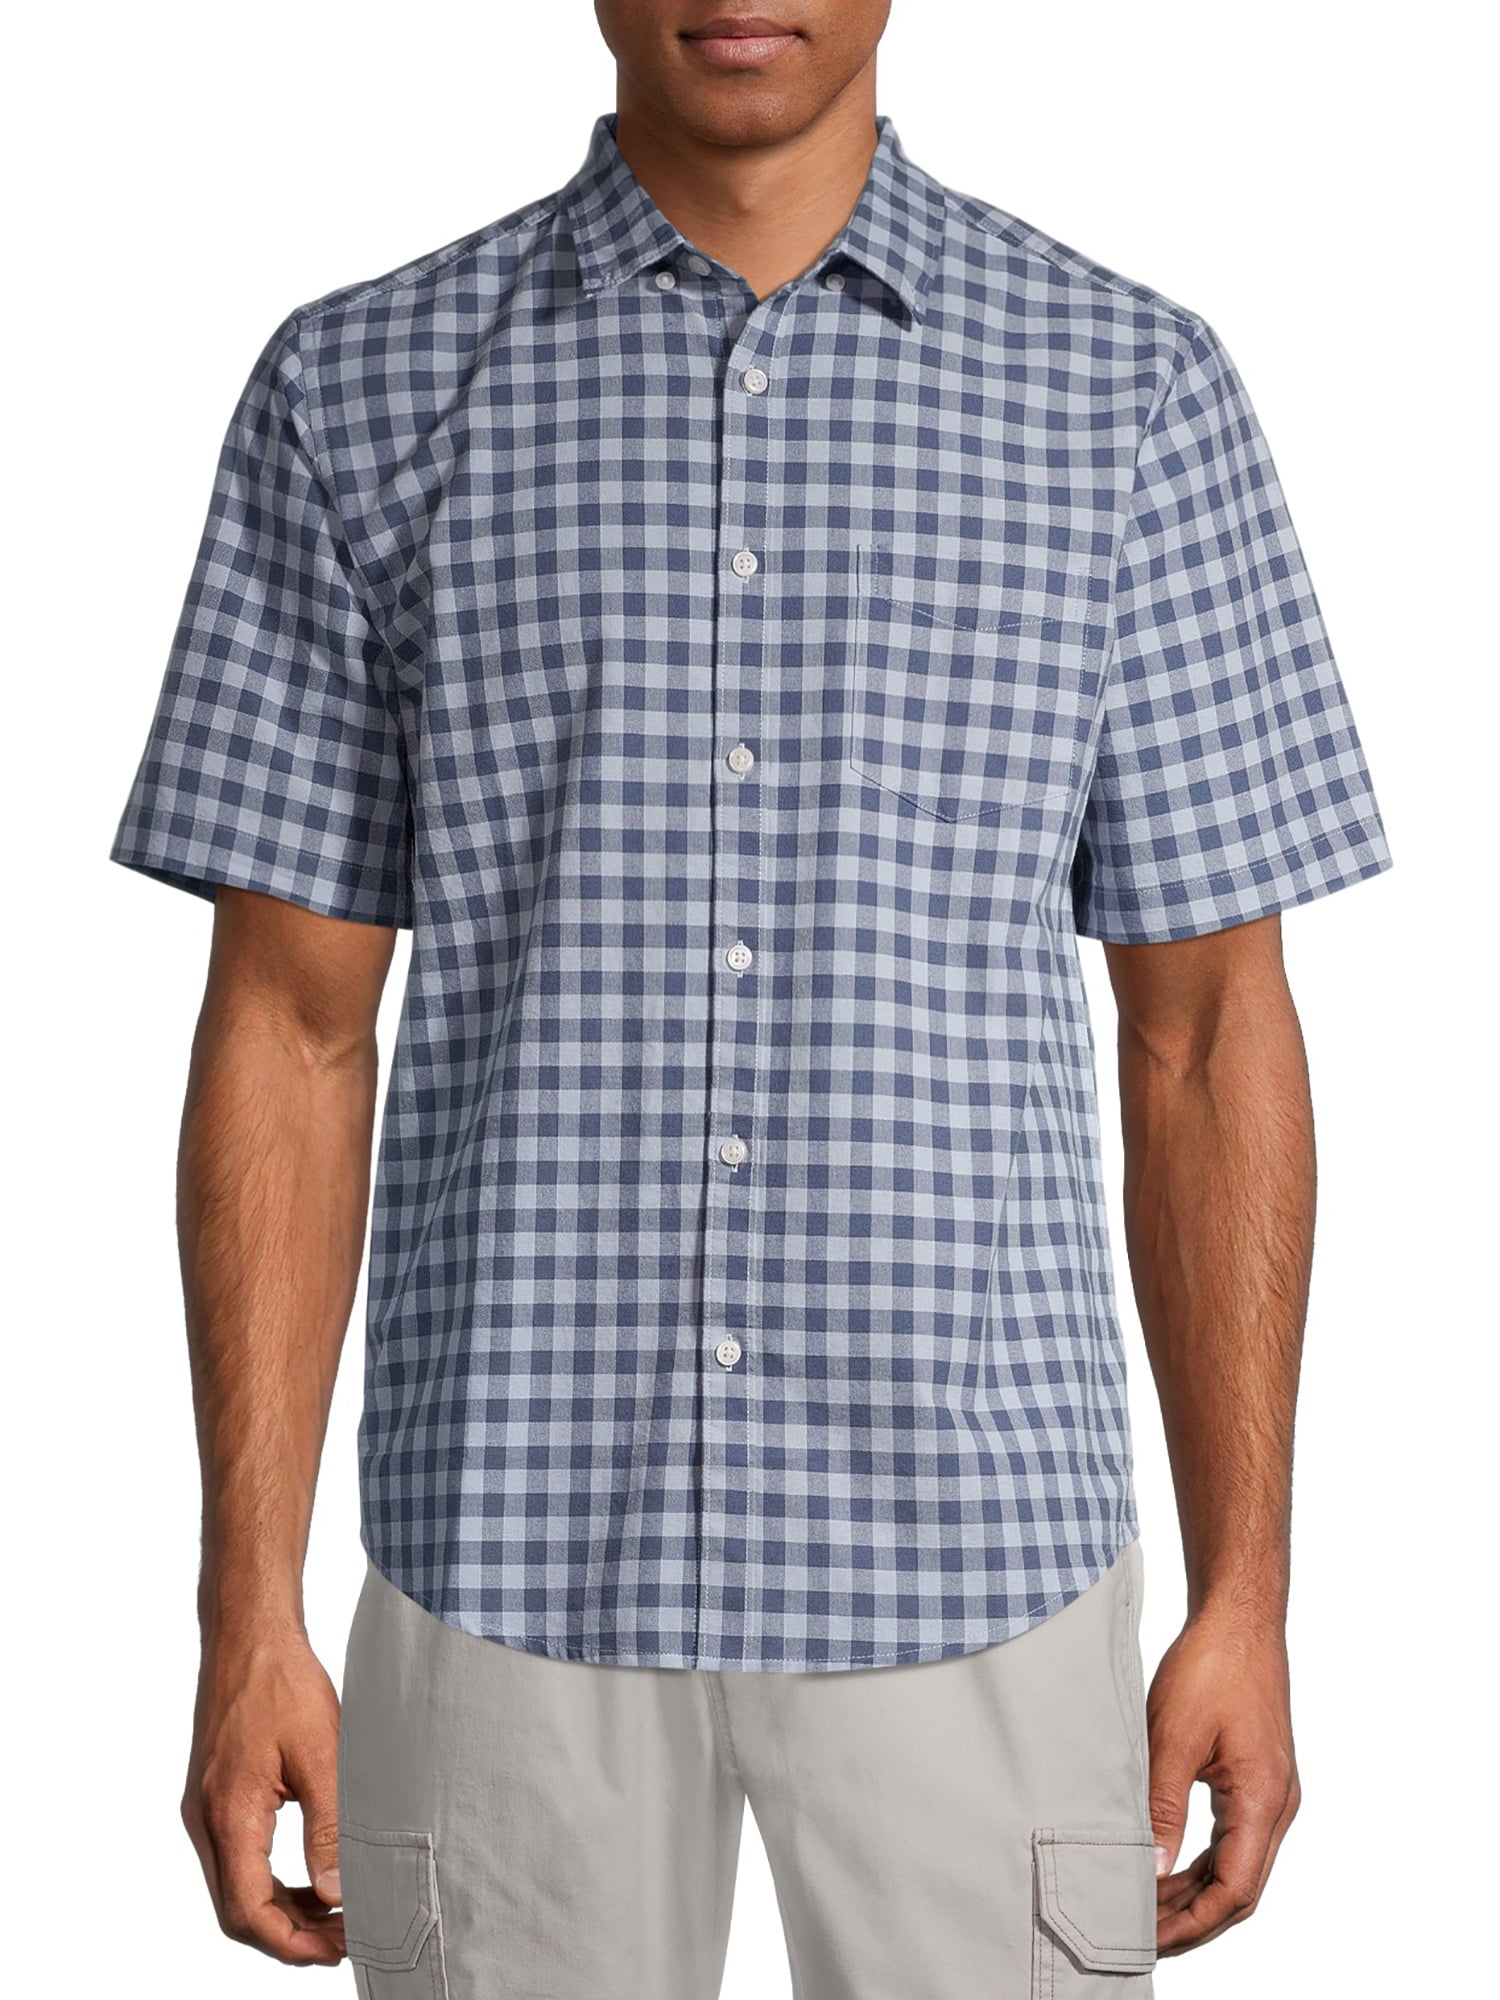 George Men's Short Sleeve Oxford Shirt - Walmart.com